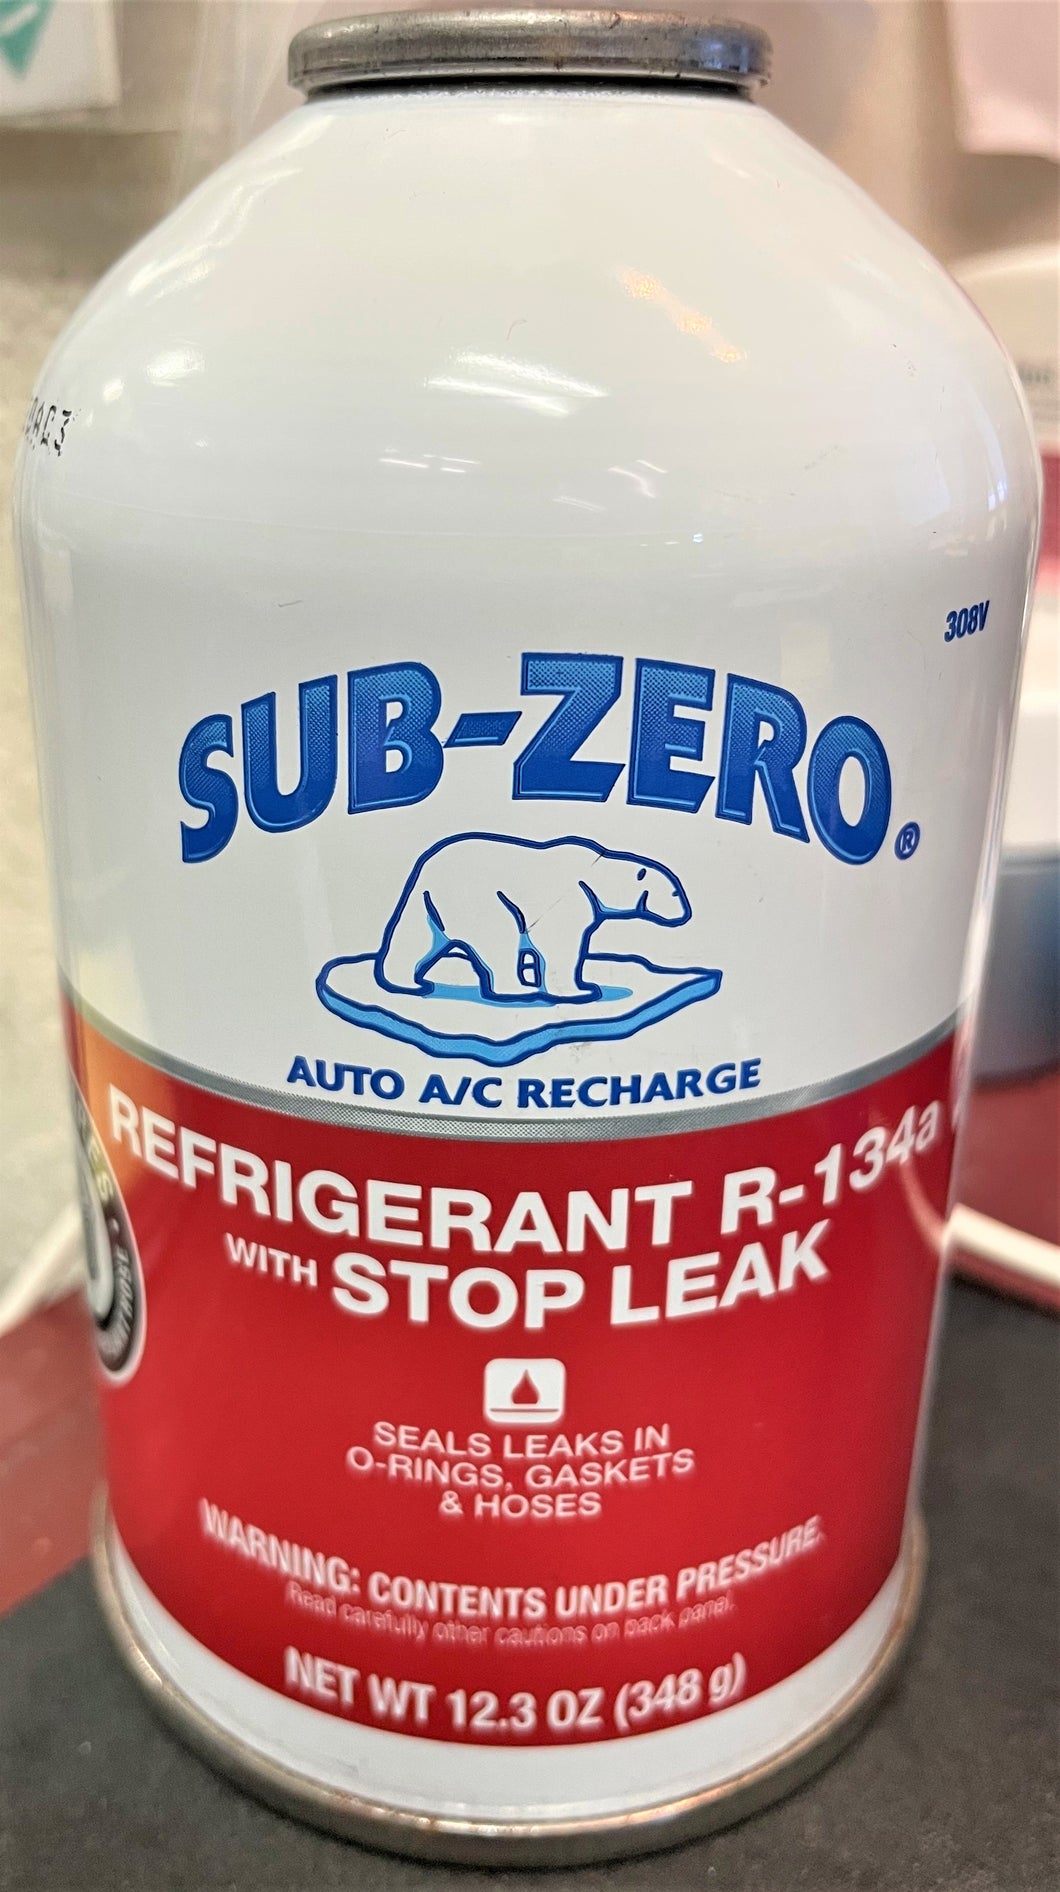 Sub-Zero 12.3 Oz Auto A/C Recharge Refrigerant R134a W/ Stop Leak